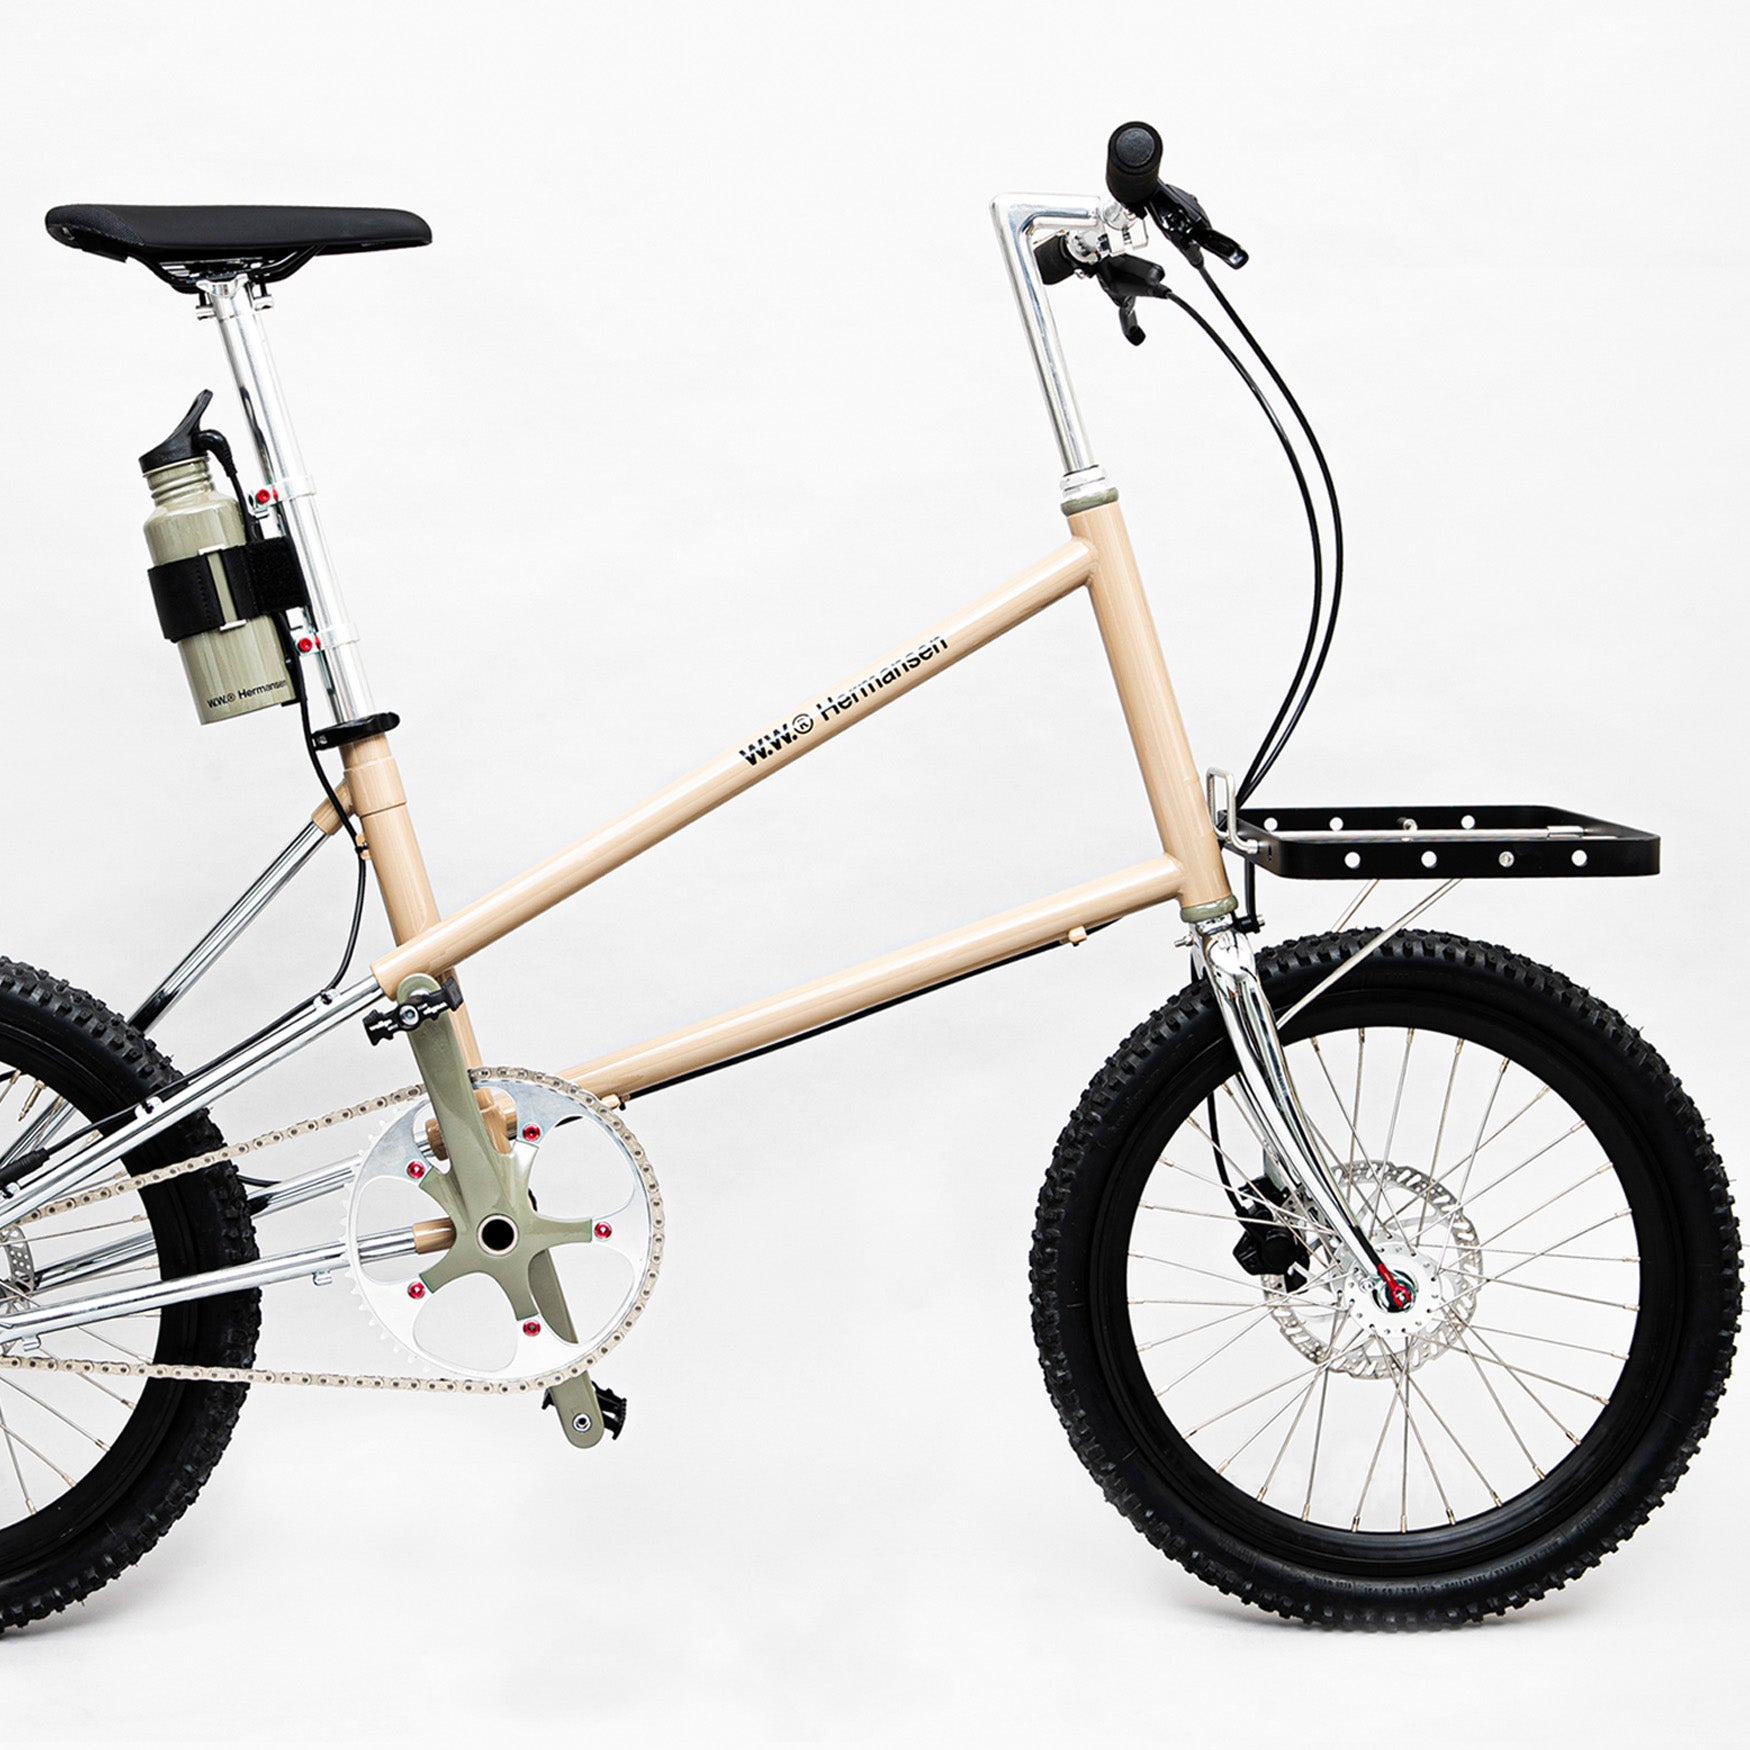 Front rack for Hermansen e-bike designed by Anders Hermansen. Here shown on Wood Wood x Hermansen collab e-bike.